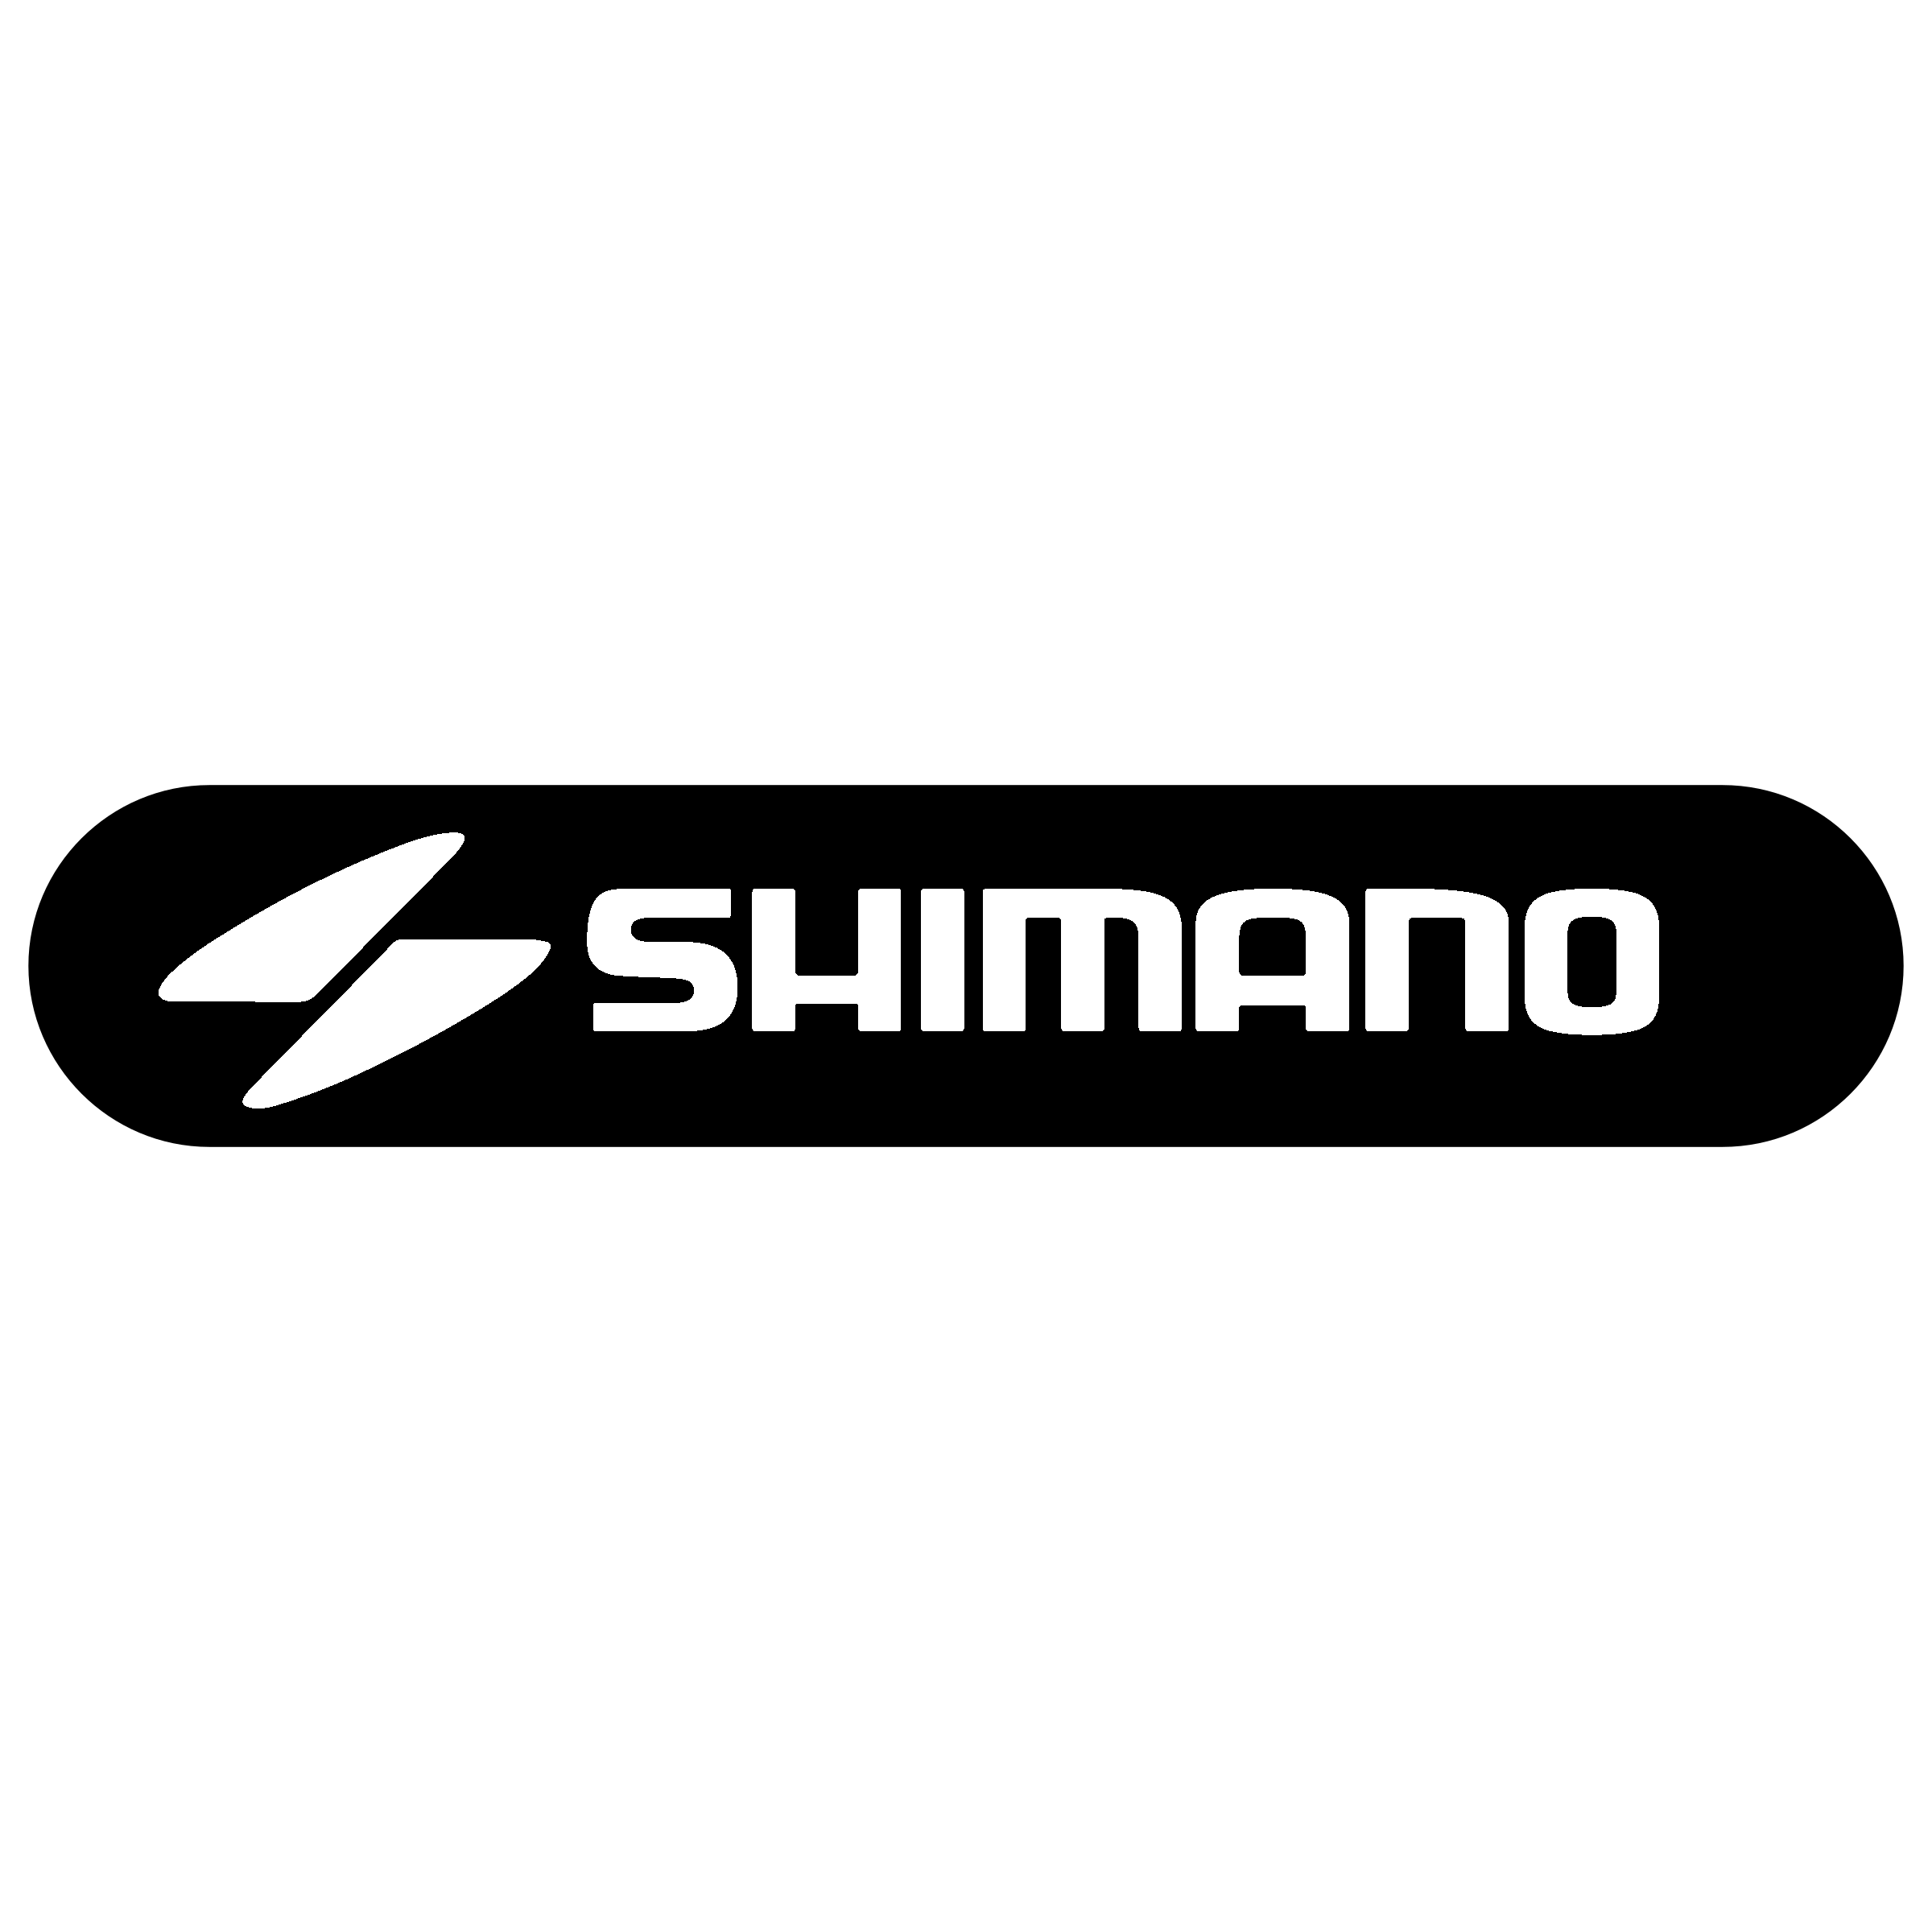 Shimano Logo - Shimano Logo PNG Transparent & SVG Vector - Freebie Supply